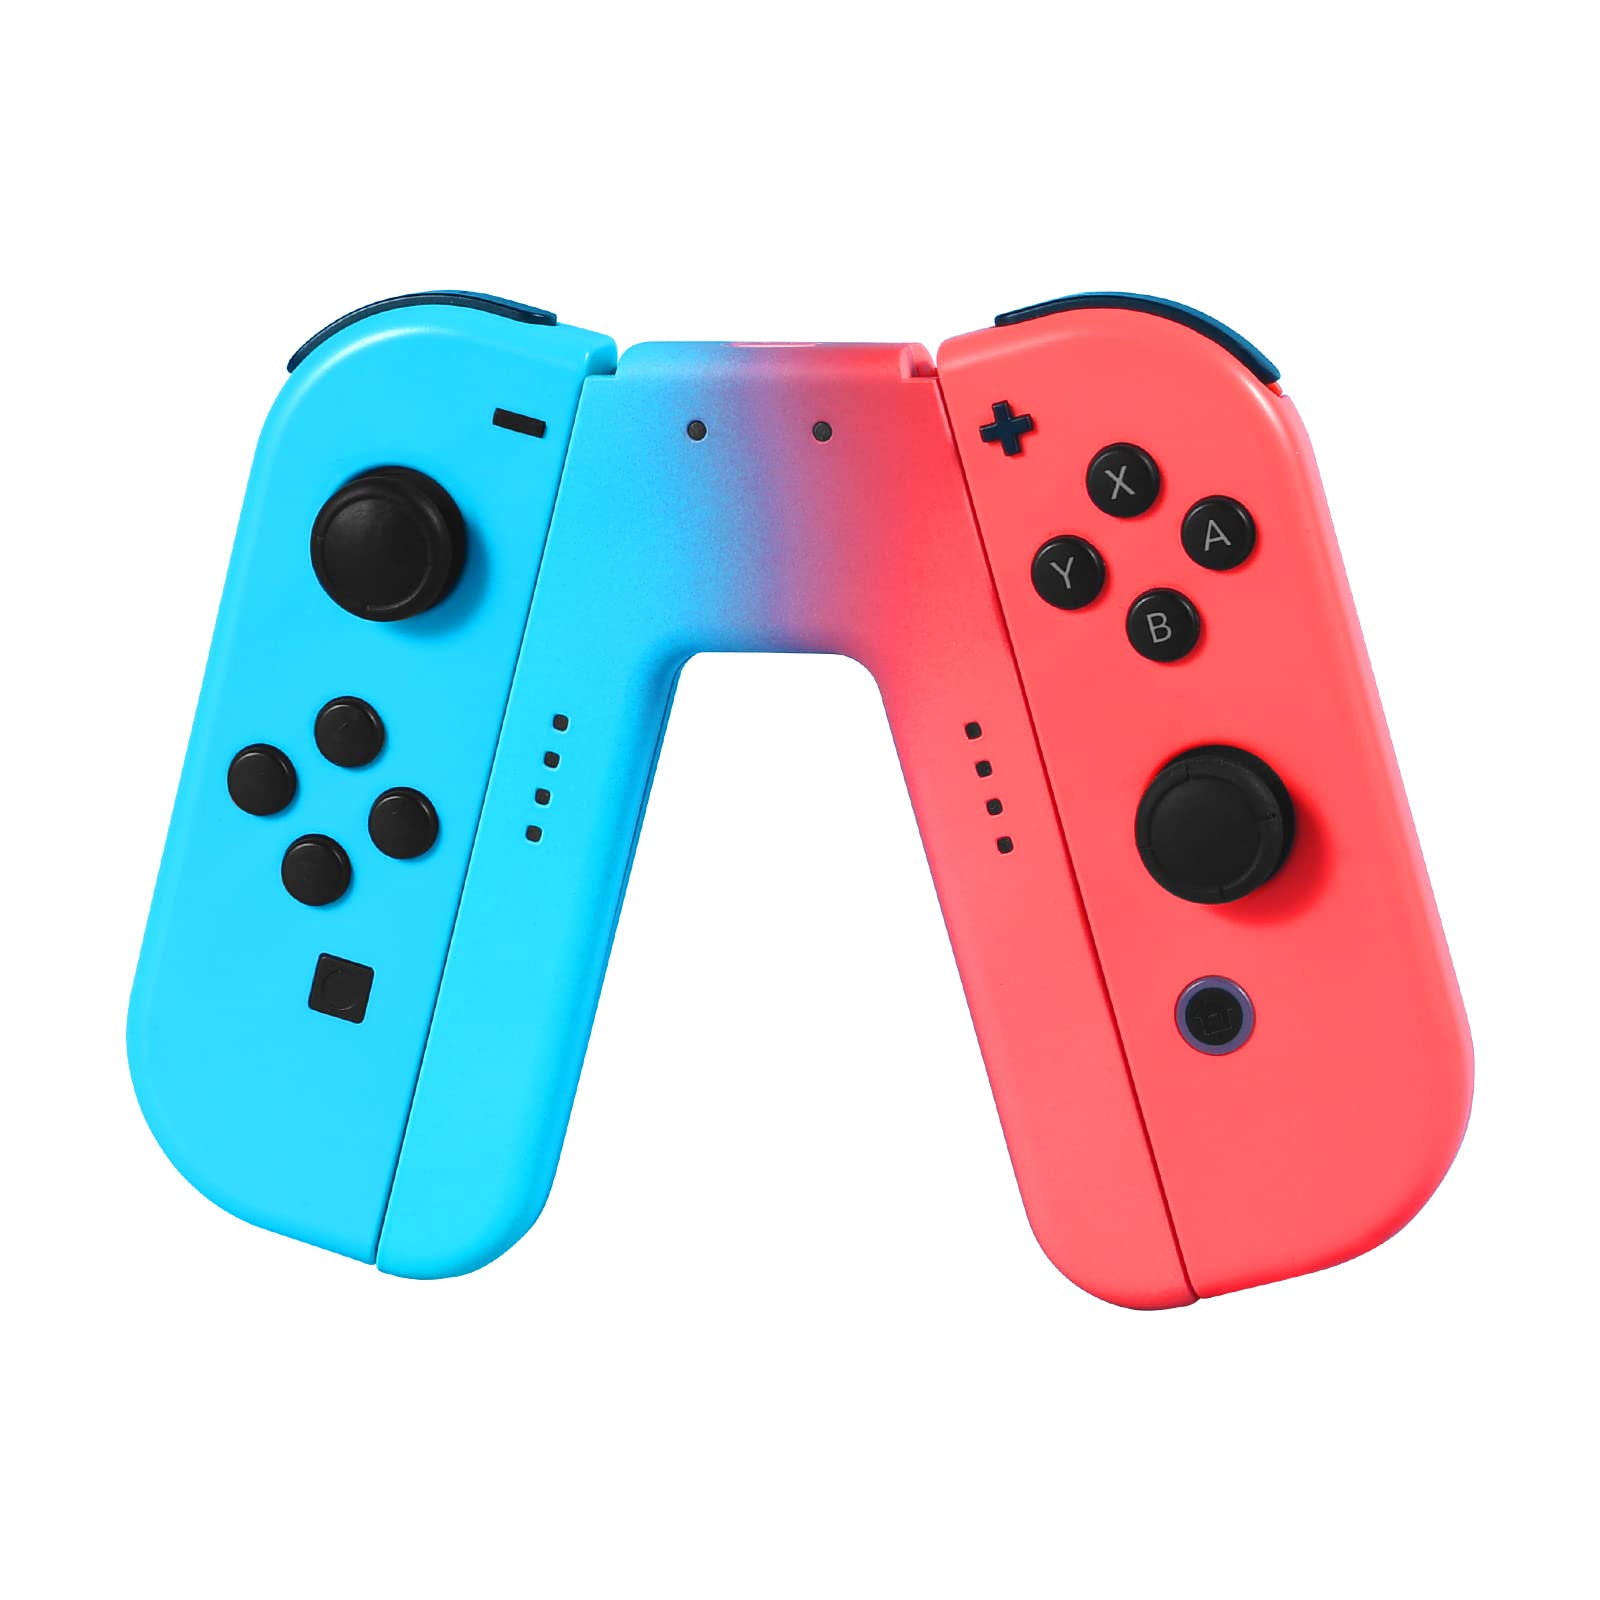 Nintendo Switch Joy-Con with thumbsticks recalibration option.